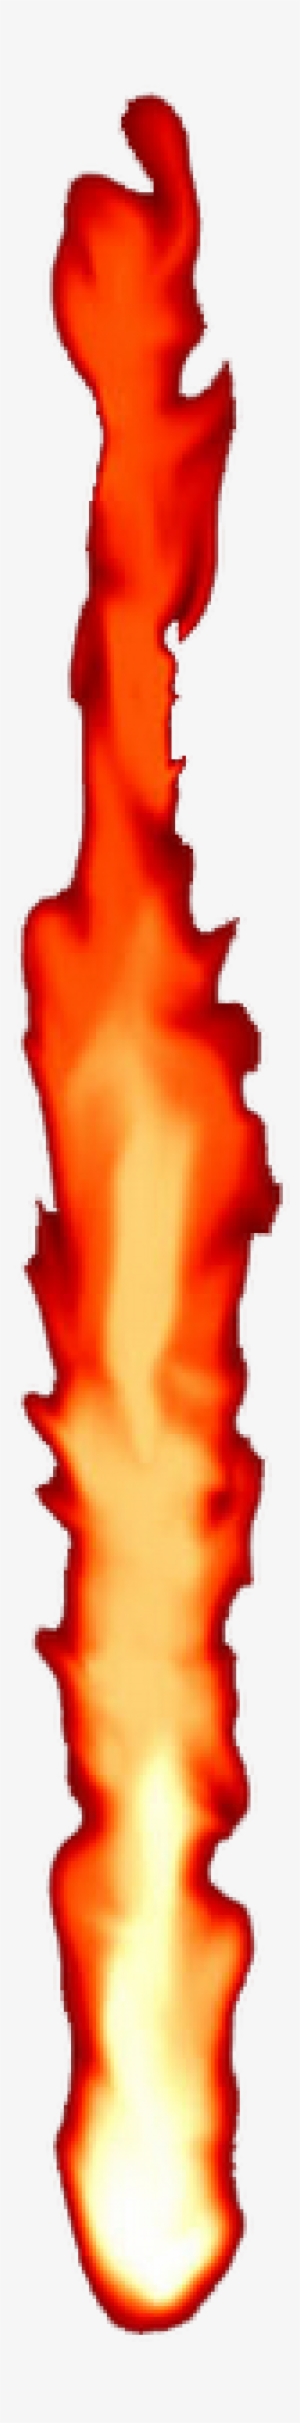 Fire Effect For Background - Illustration